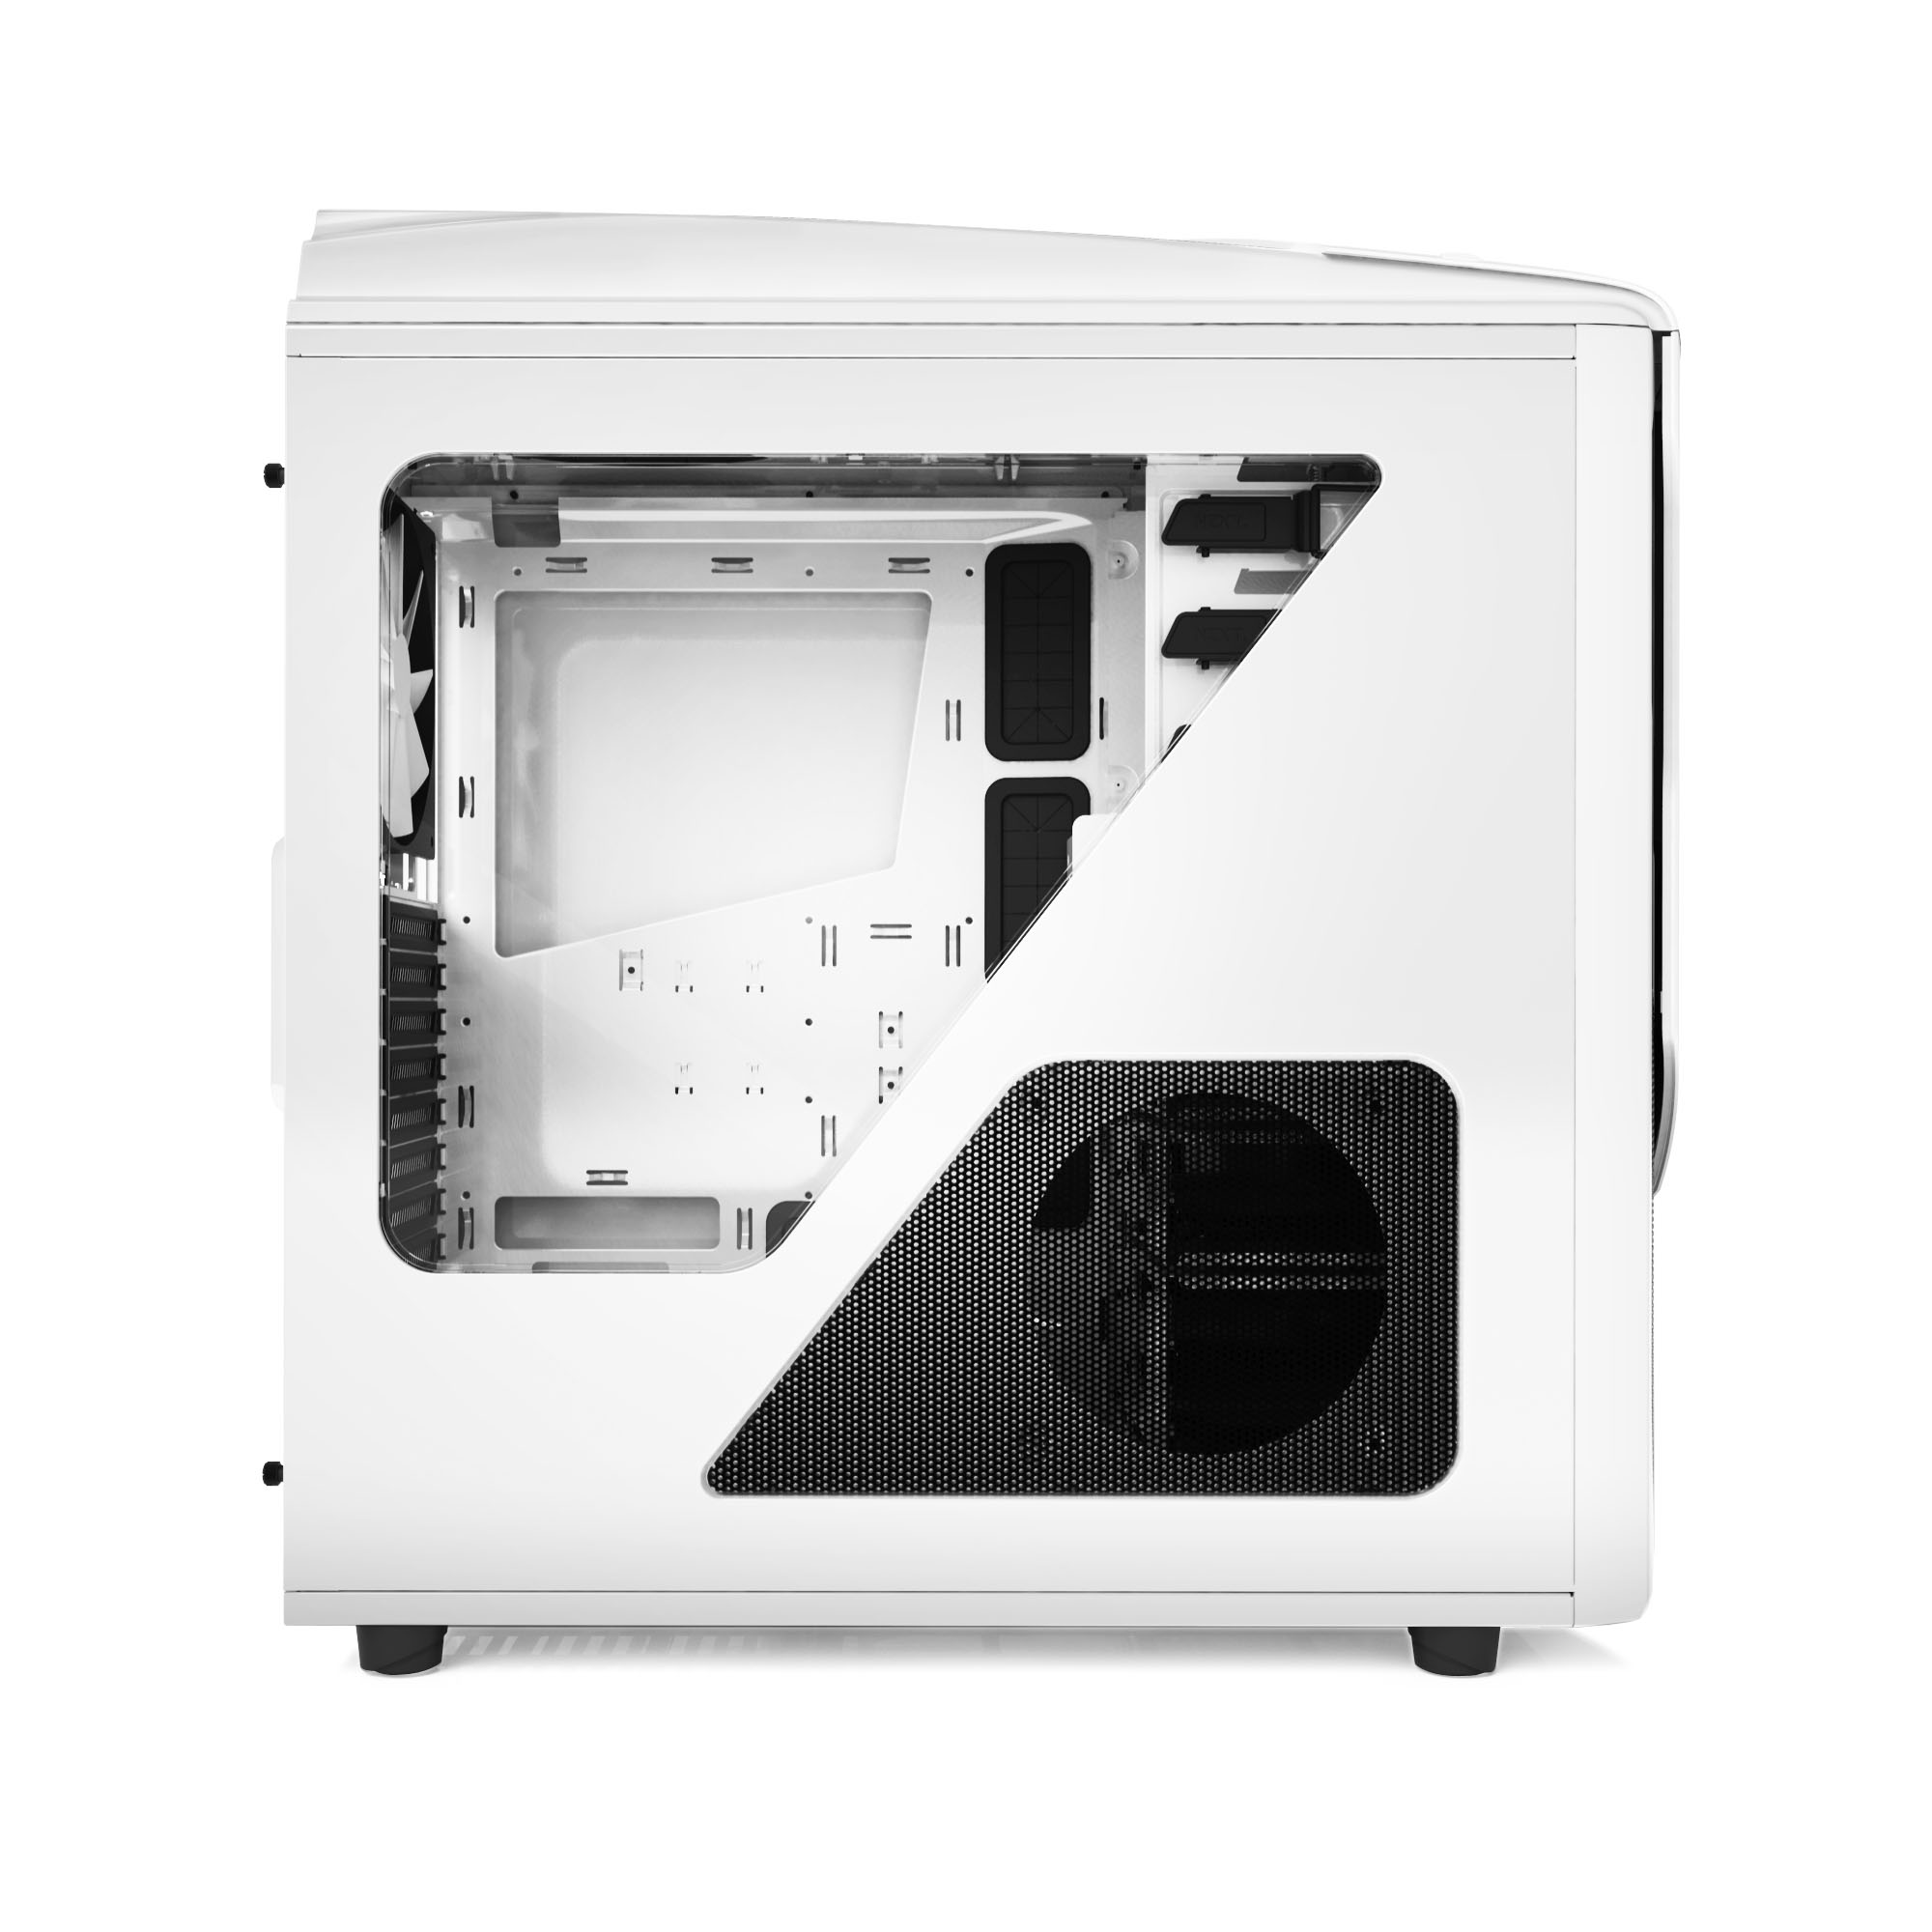 NZXT - NZXT Phantom 530 Full Tower Gaming Case - White